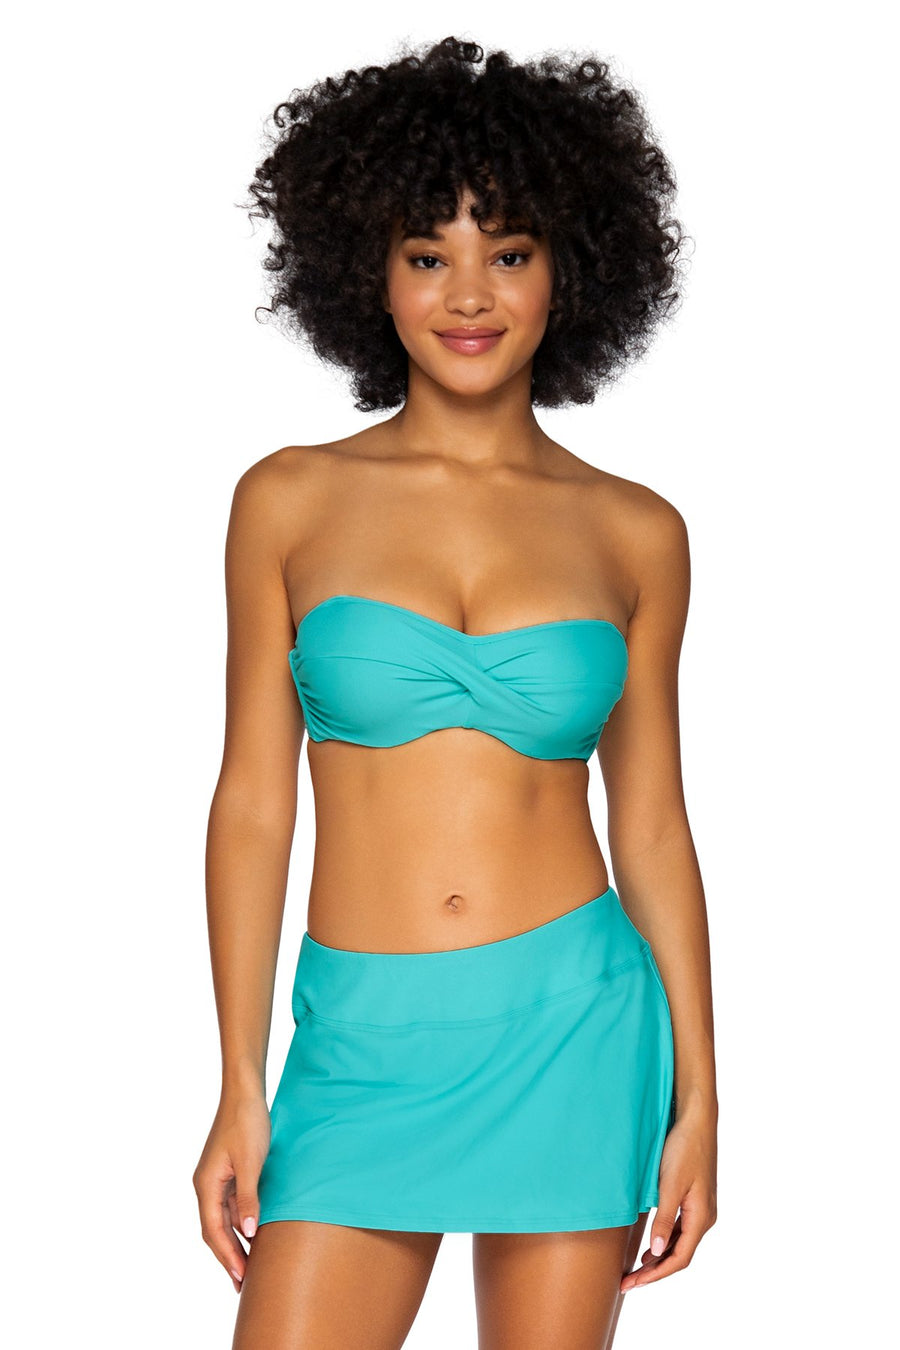 Sunsets Seaside Aqua Sporty Swim Skirt Bottom - Key West Swimwear